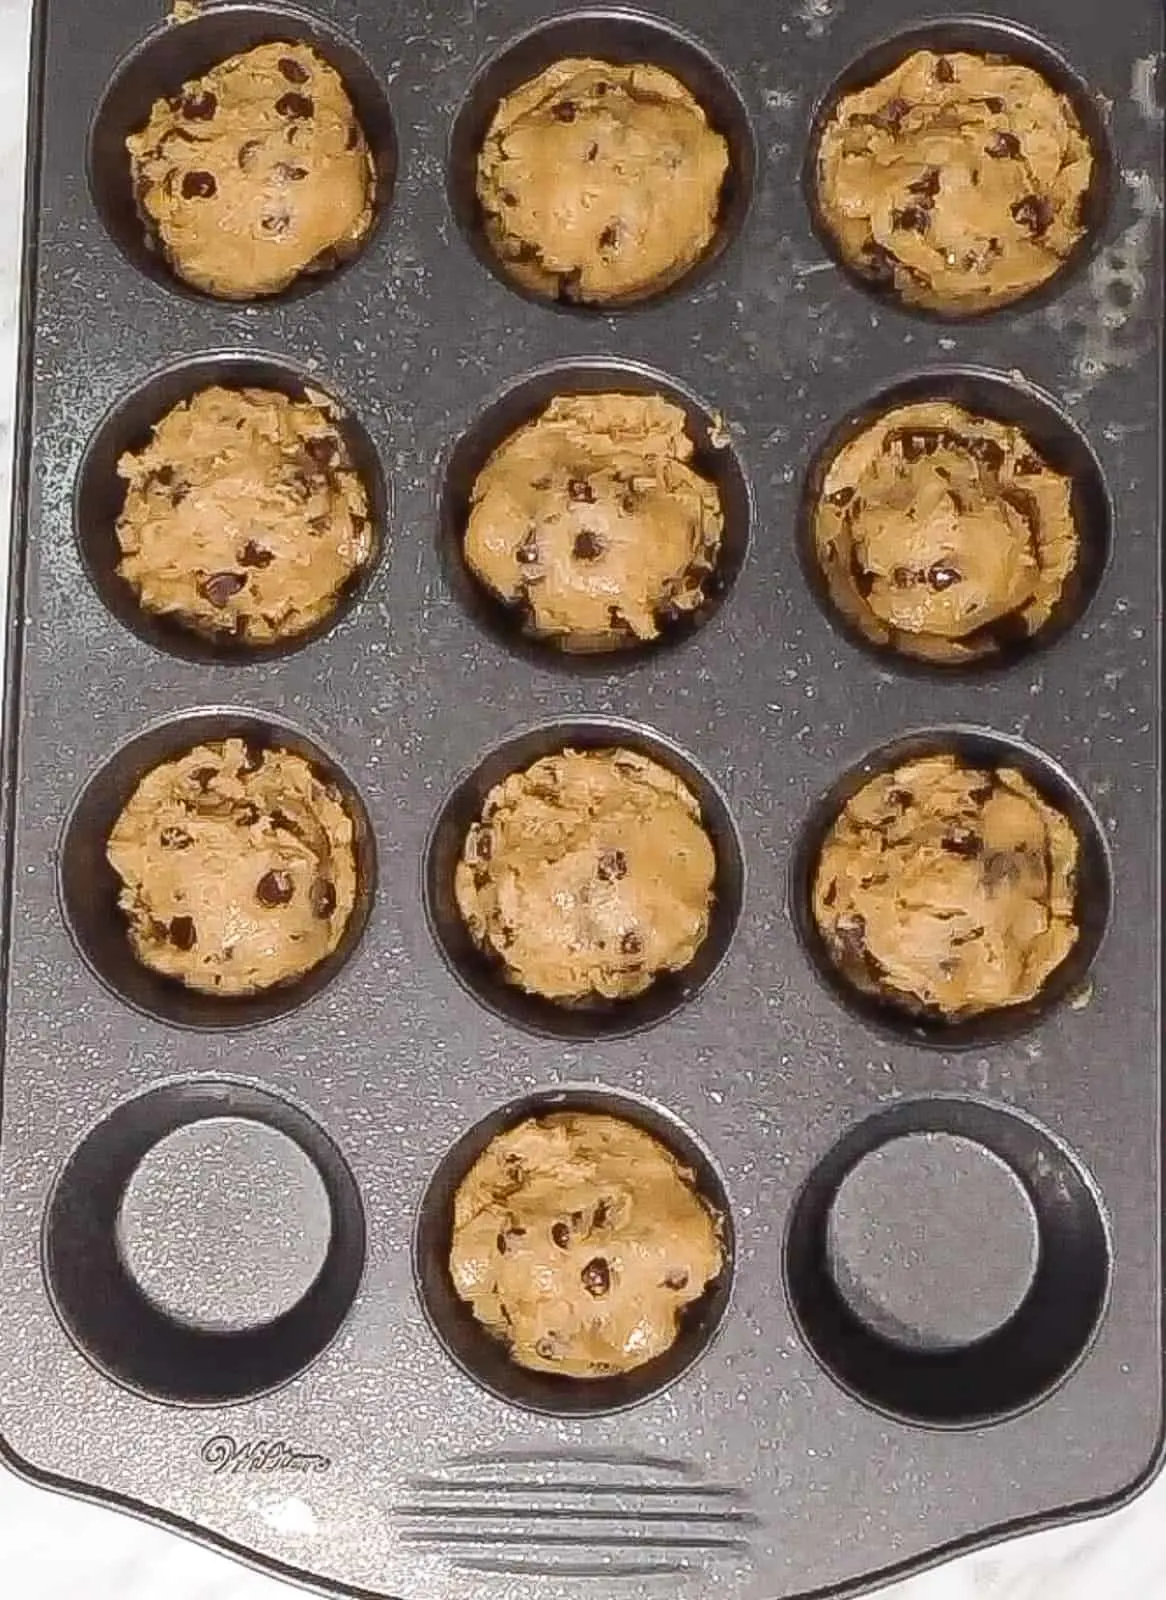 caramel stuffed cookies before baking